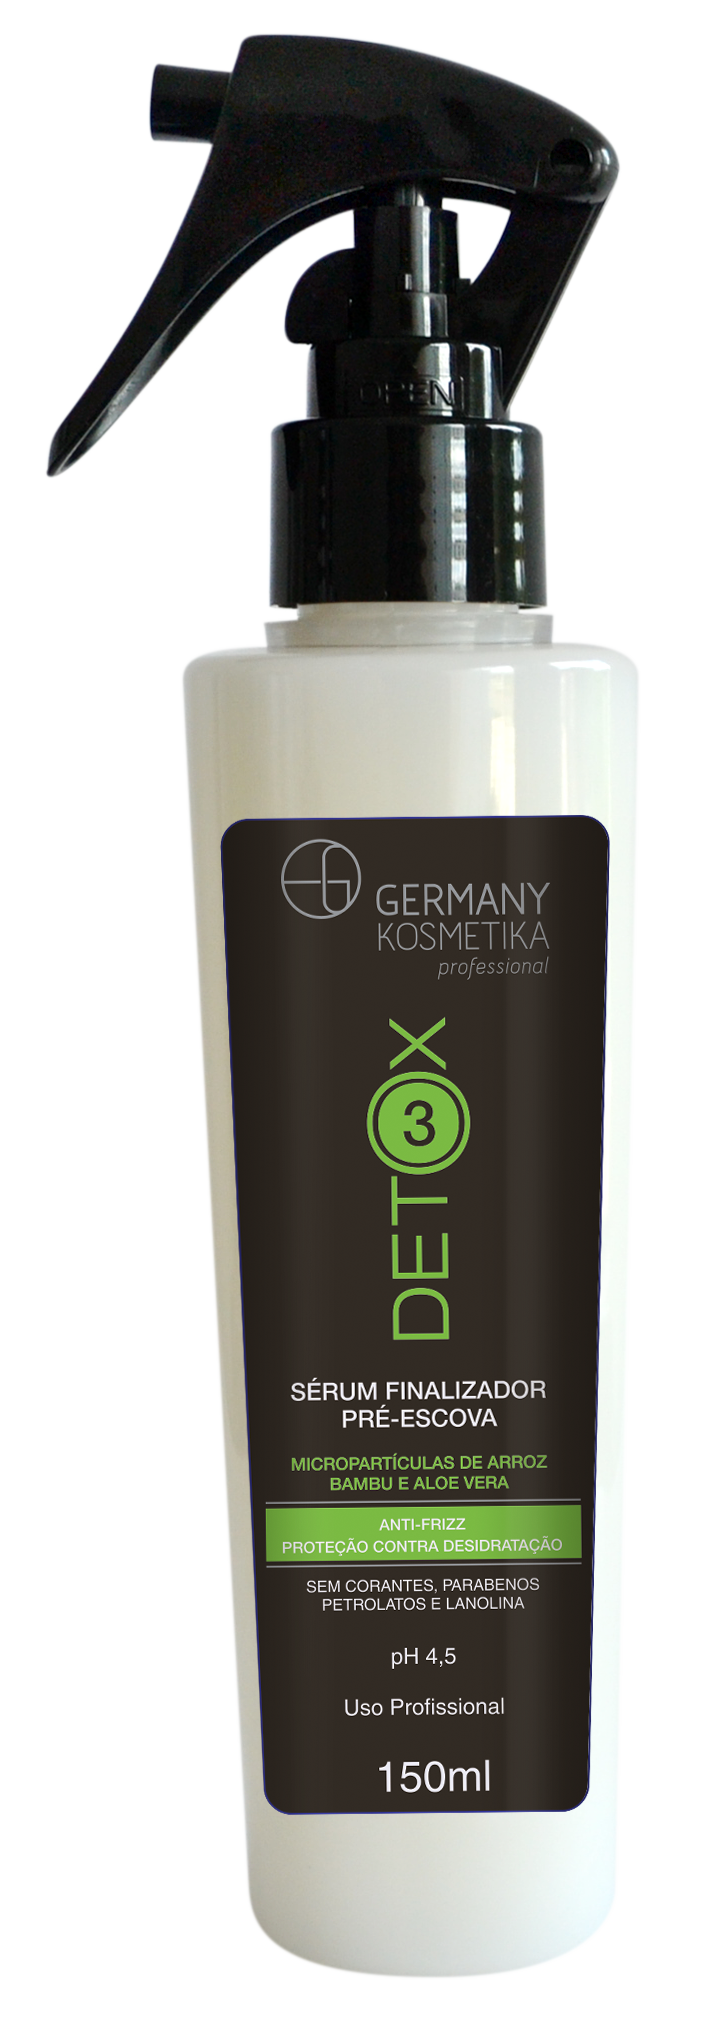 GERMANY DETOX Serum